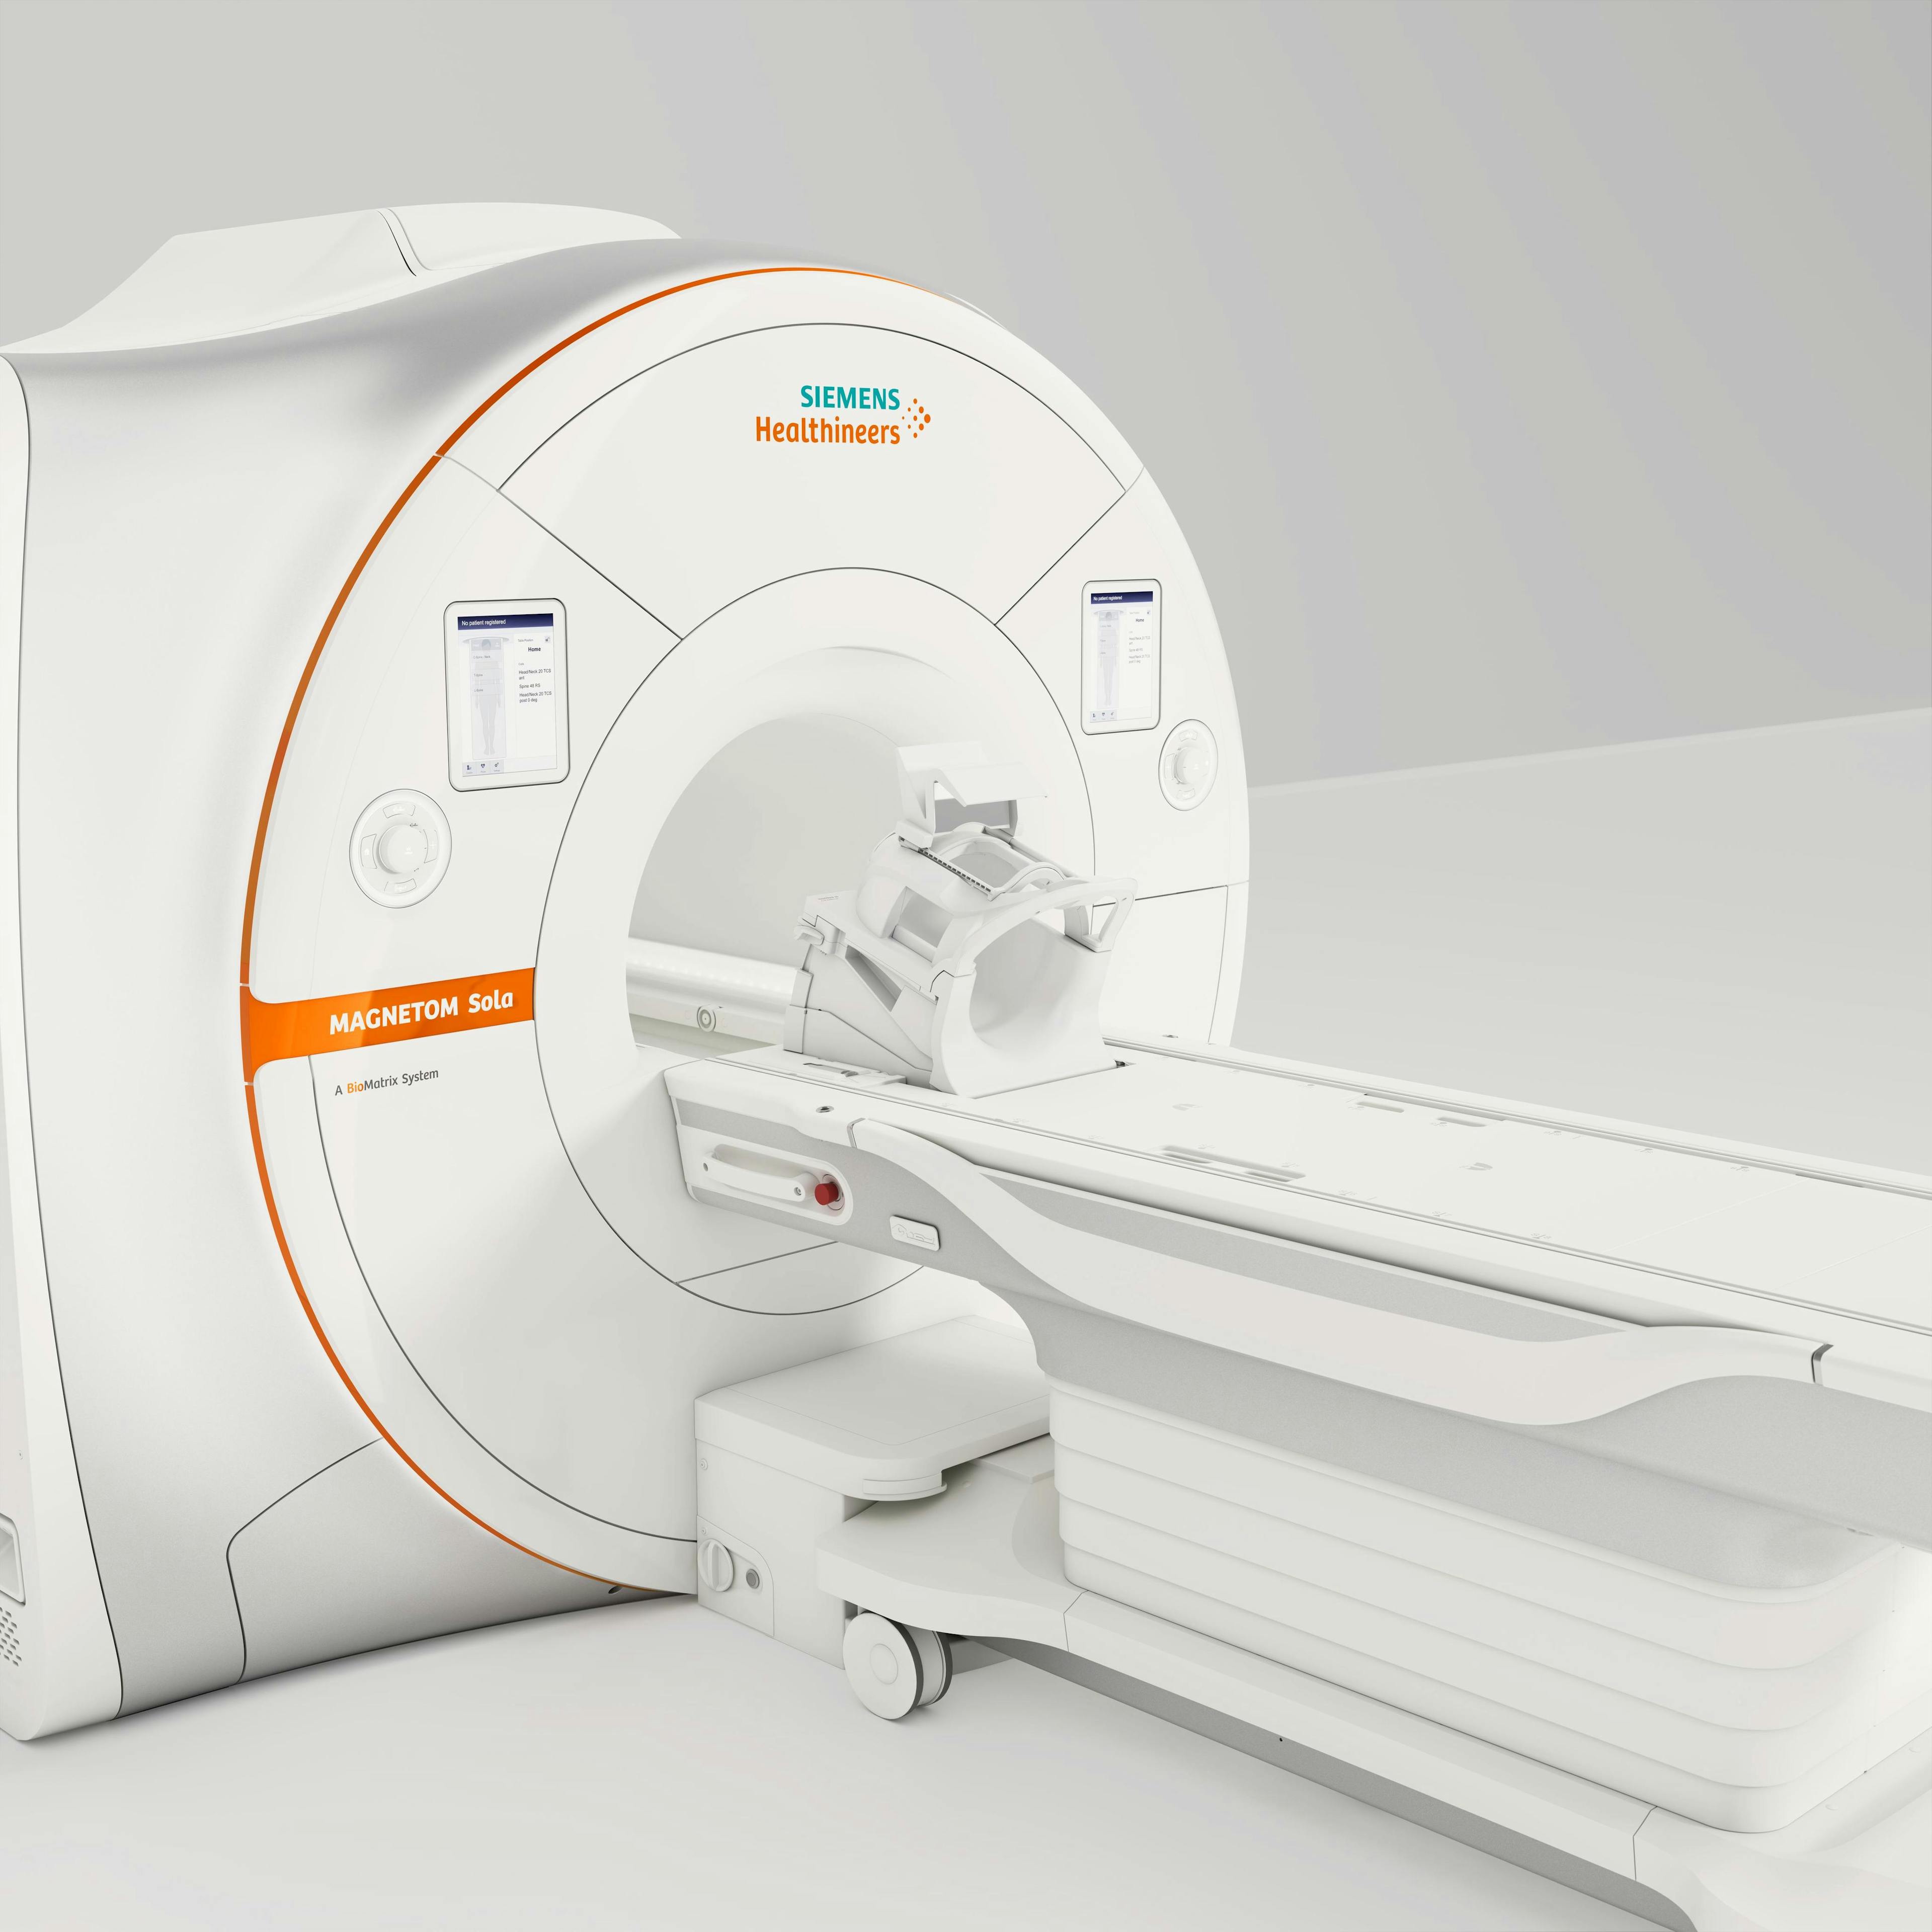 MAGNETOM Sola 1.5T MRI. (Photo courtesy of Schwarzman Animal Medical Center)